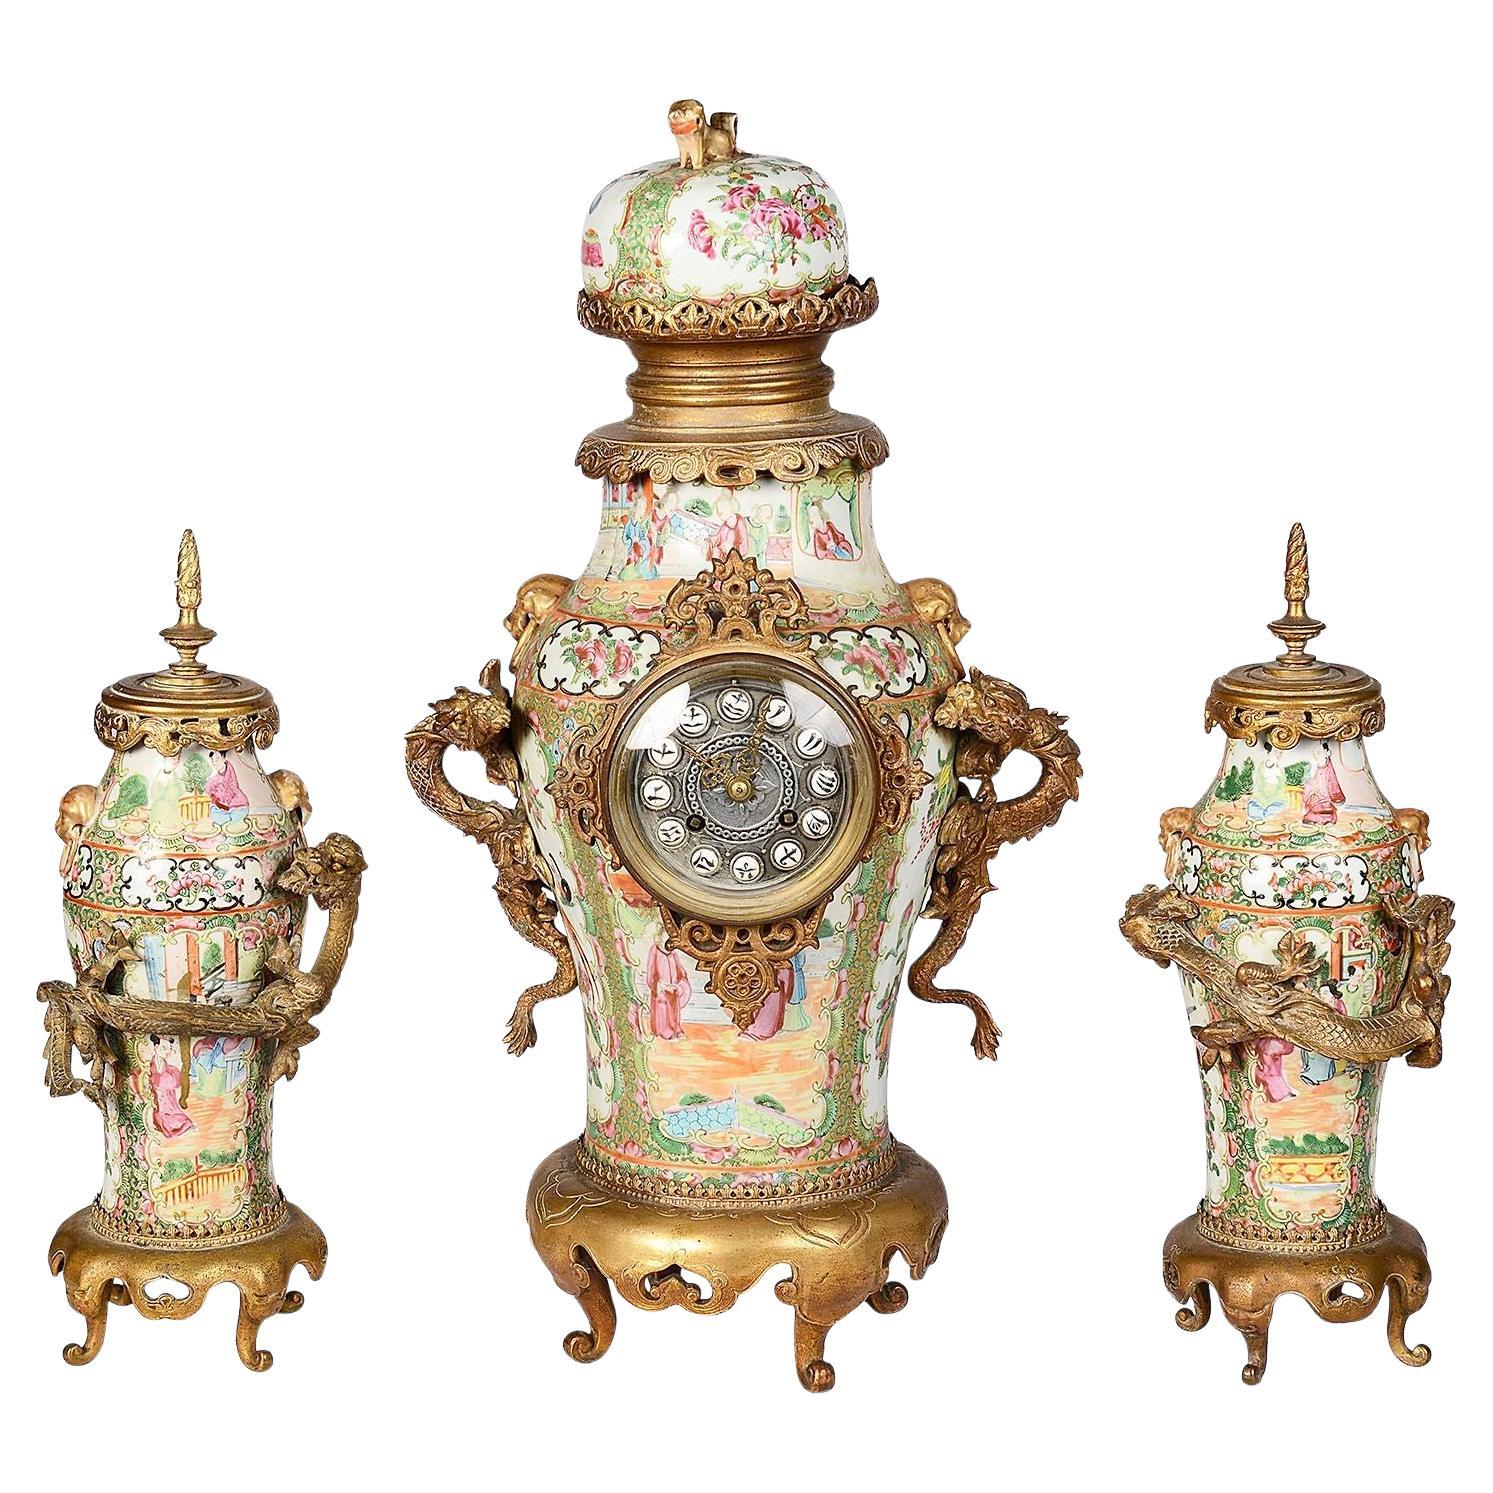 Chinese Rose Medallion porcelain clock set, 19th Century